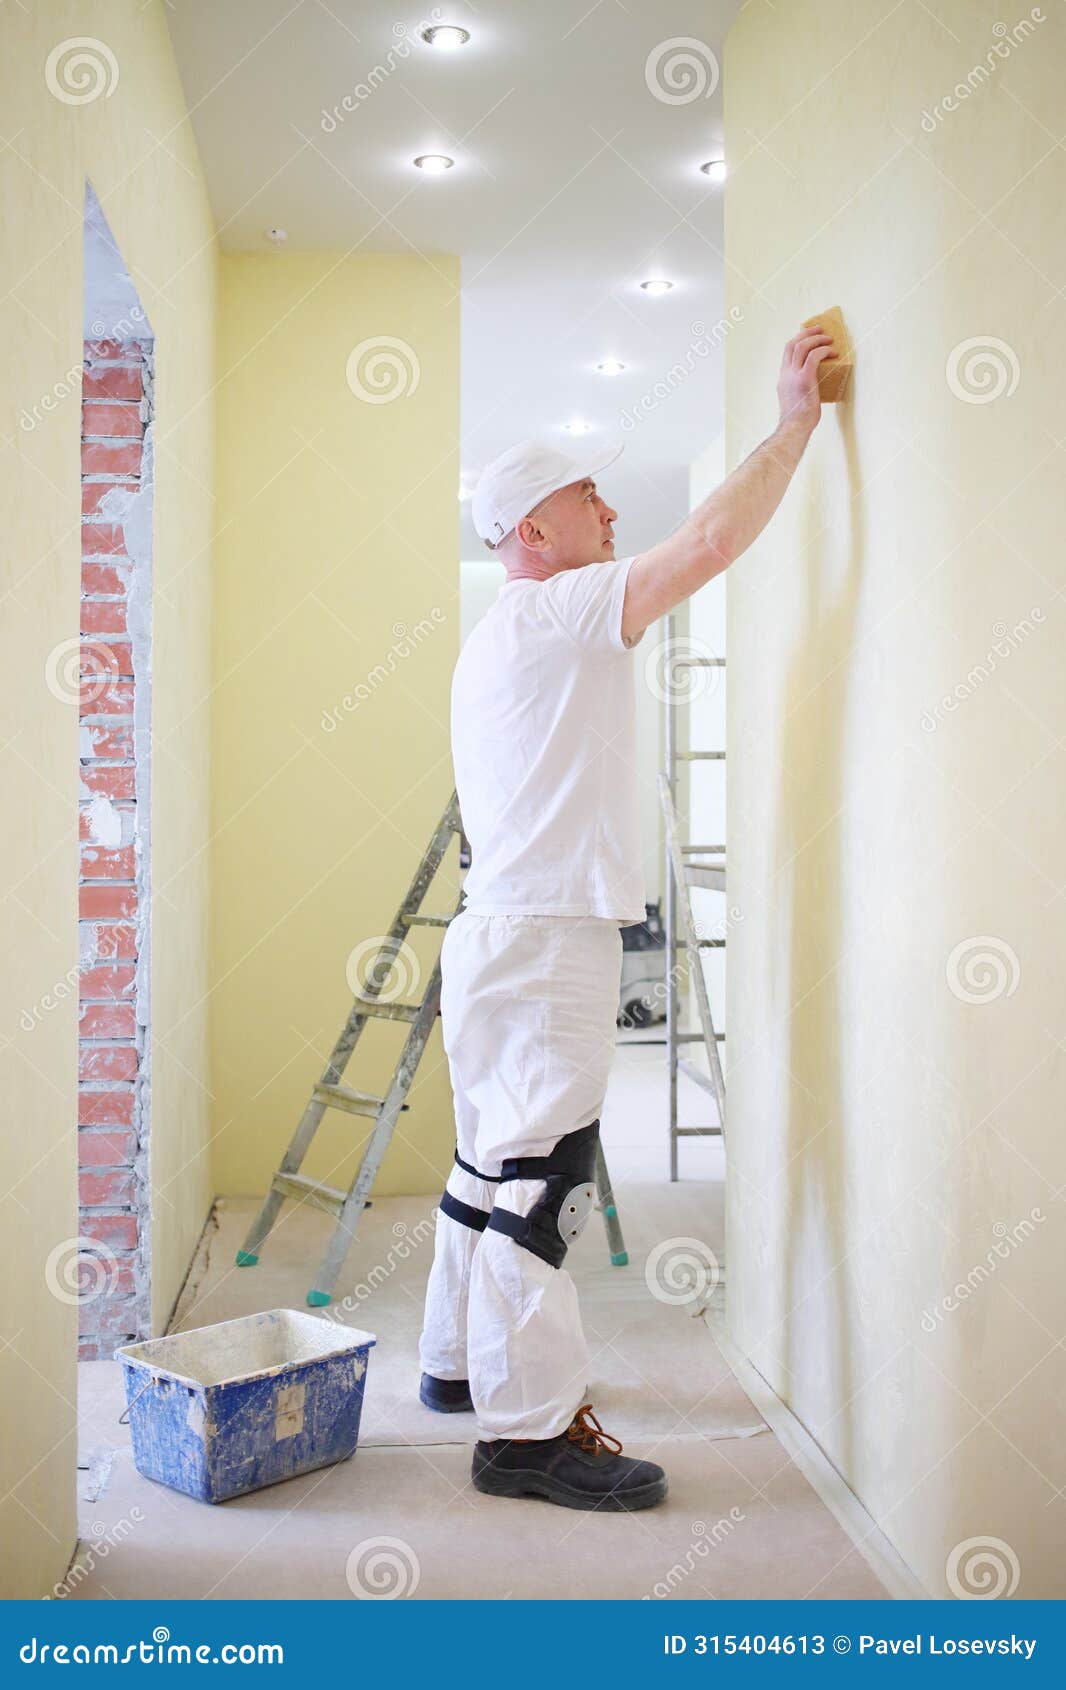 finisher polishing the wall using a sanding